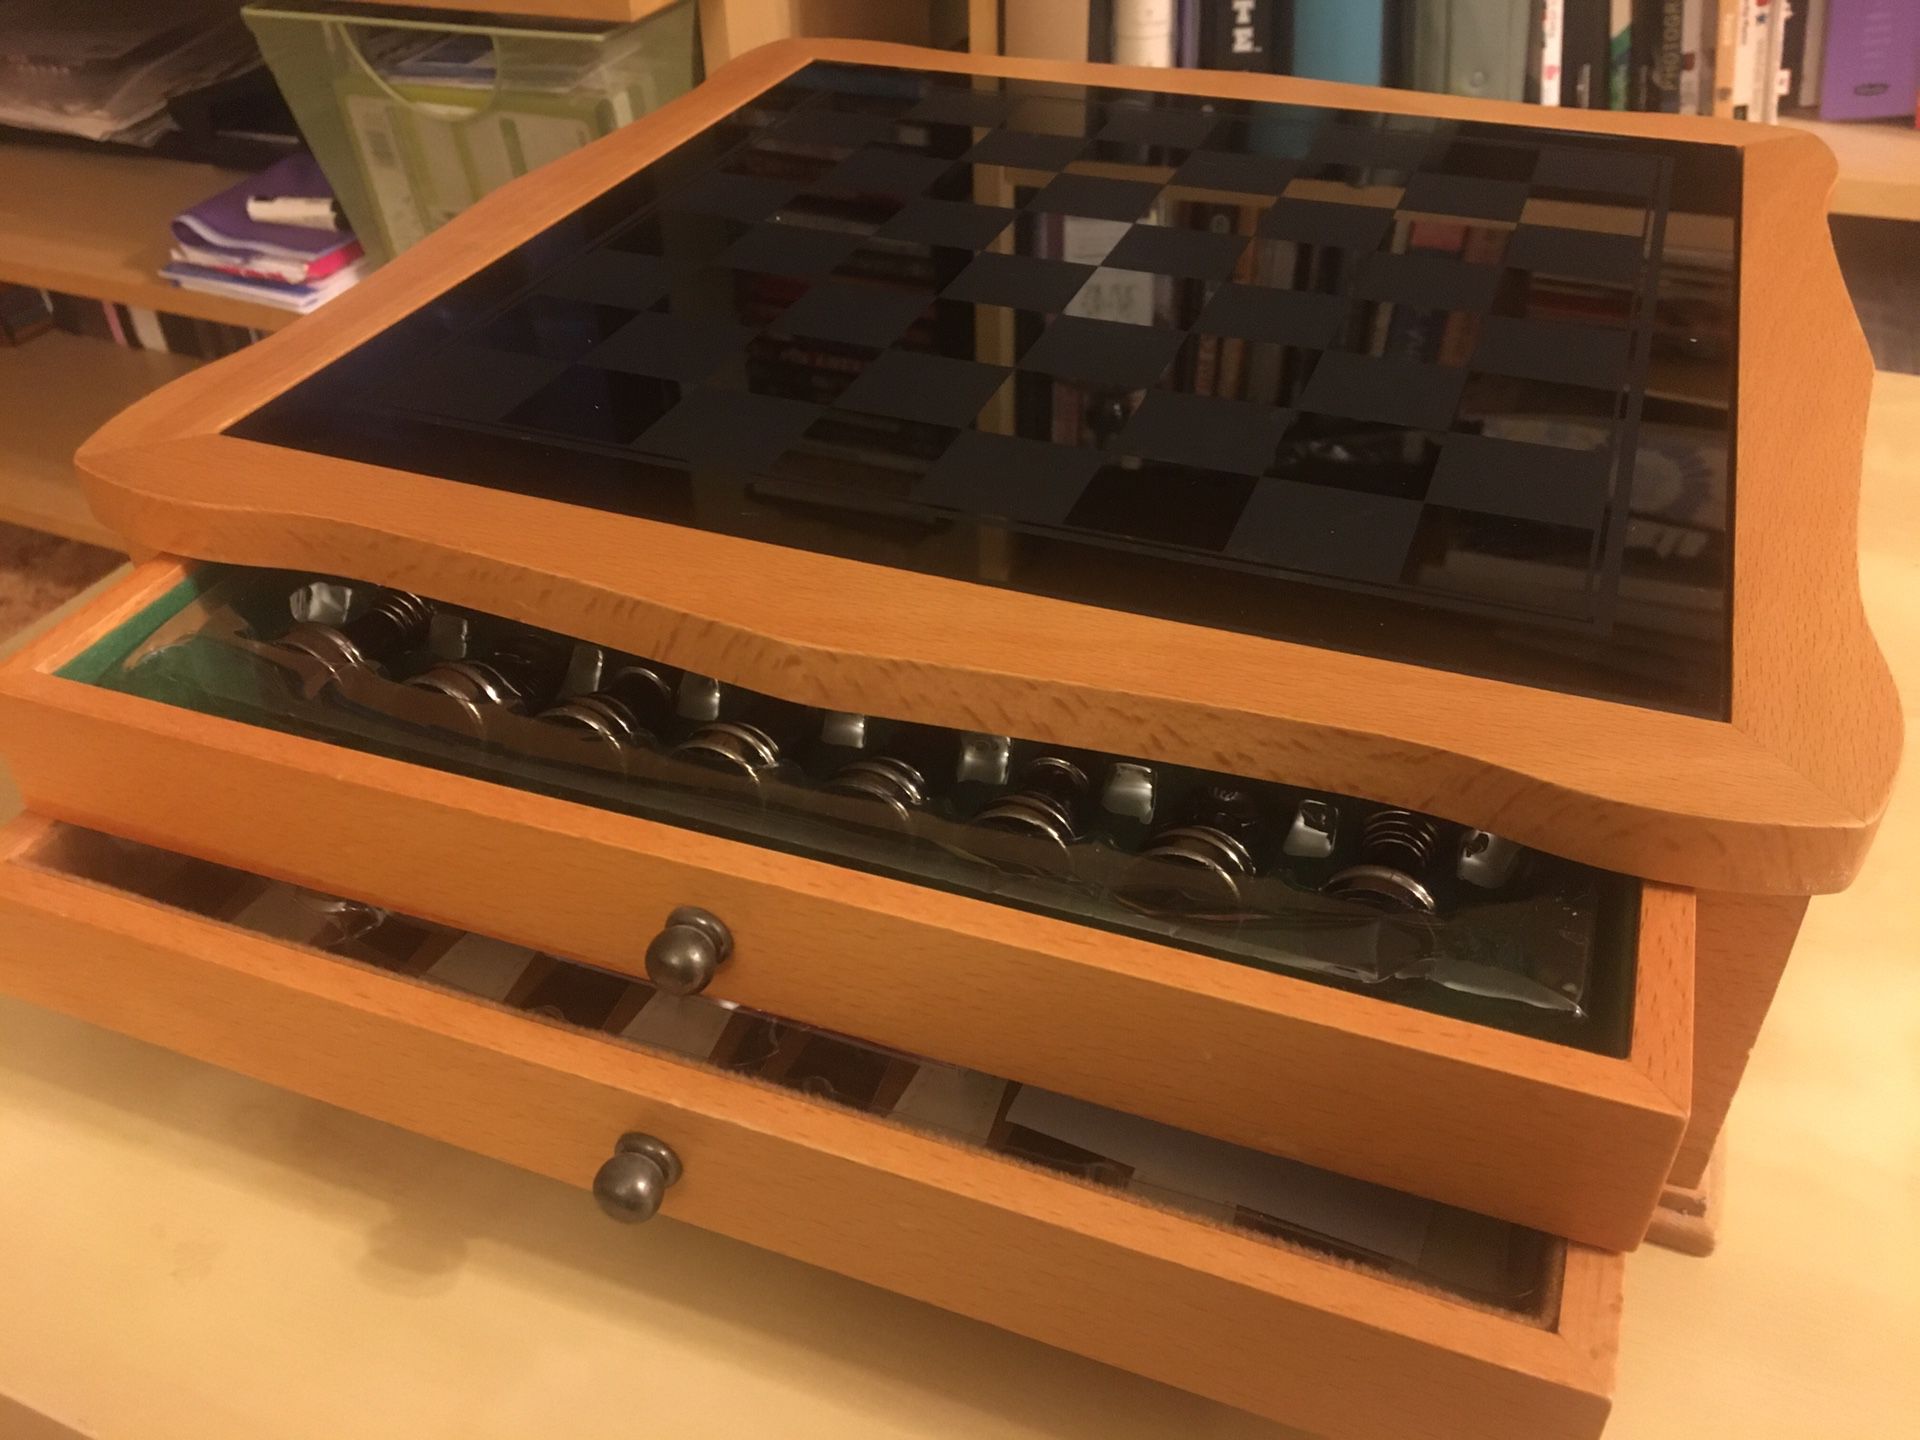 Wood box board games